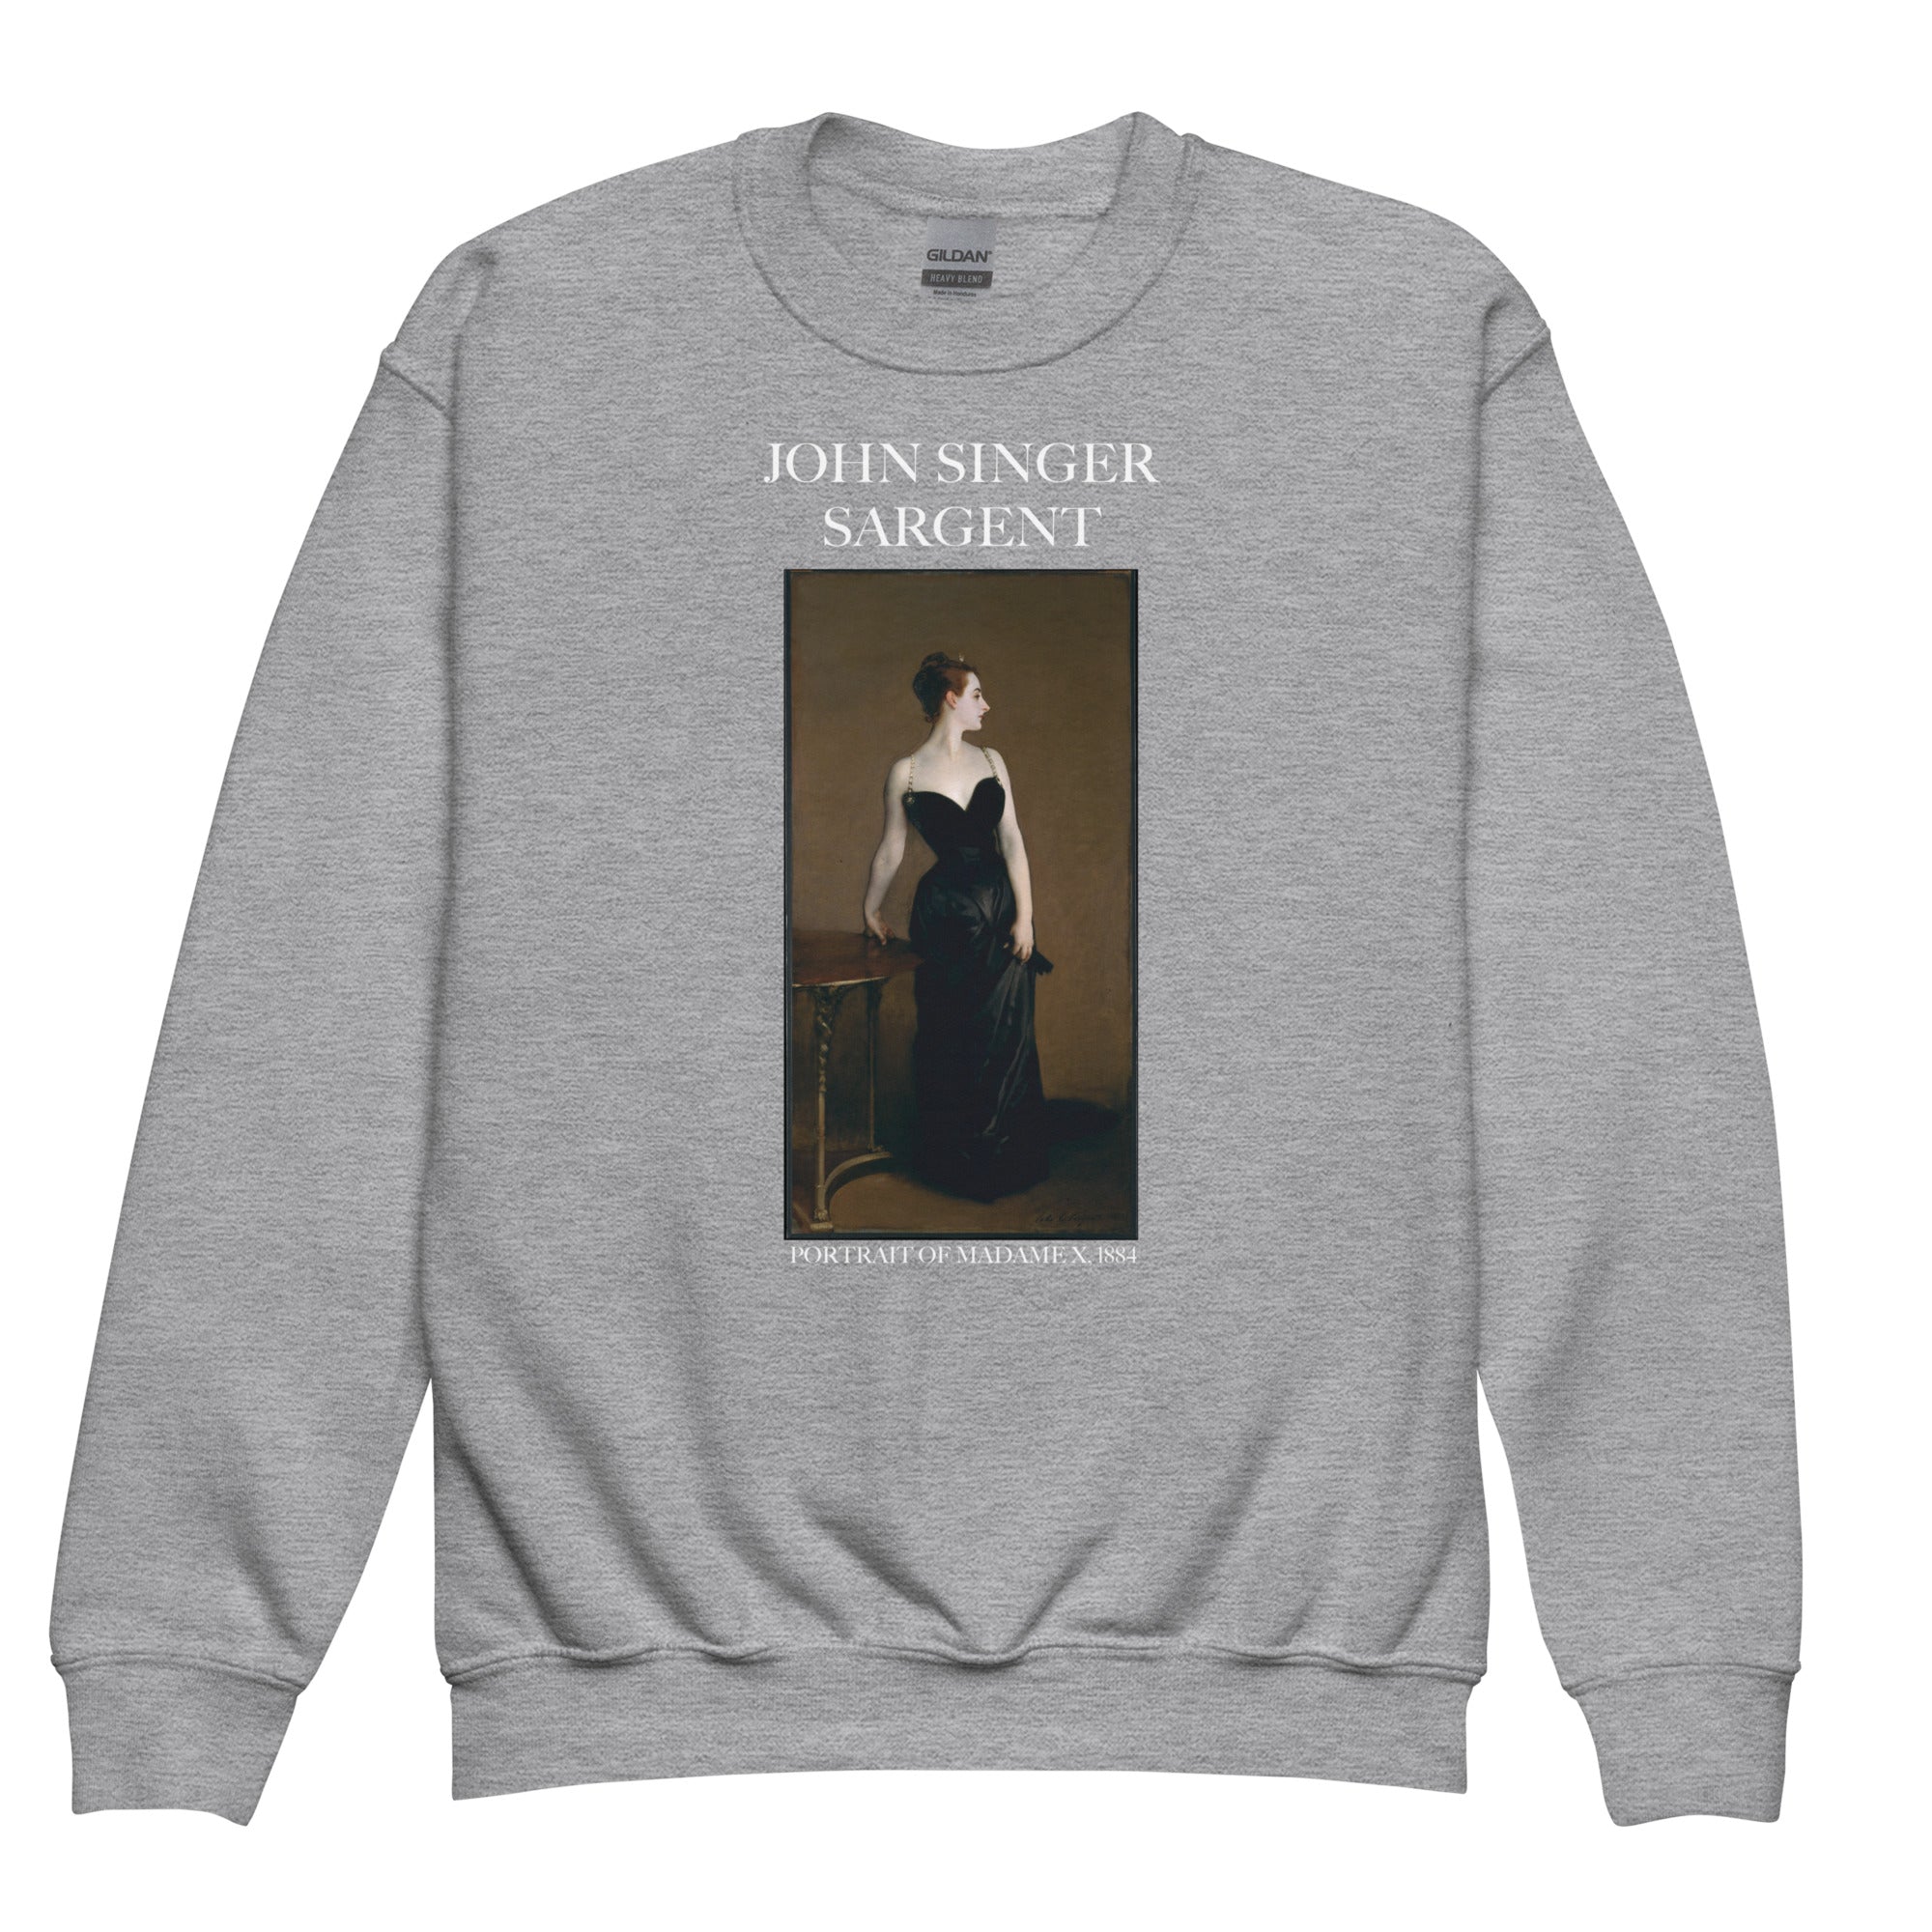 John Singer Sargent 'Portrait of Madame X' Famous Painting Crewneck Sweatshirt | Premium Youth Art Sweatshirt